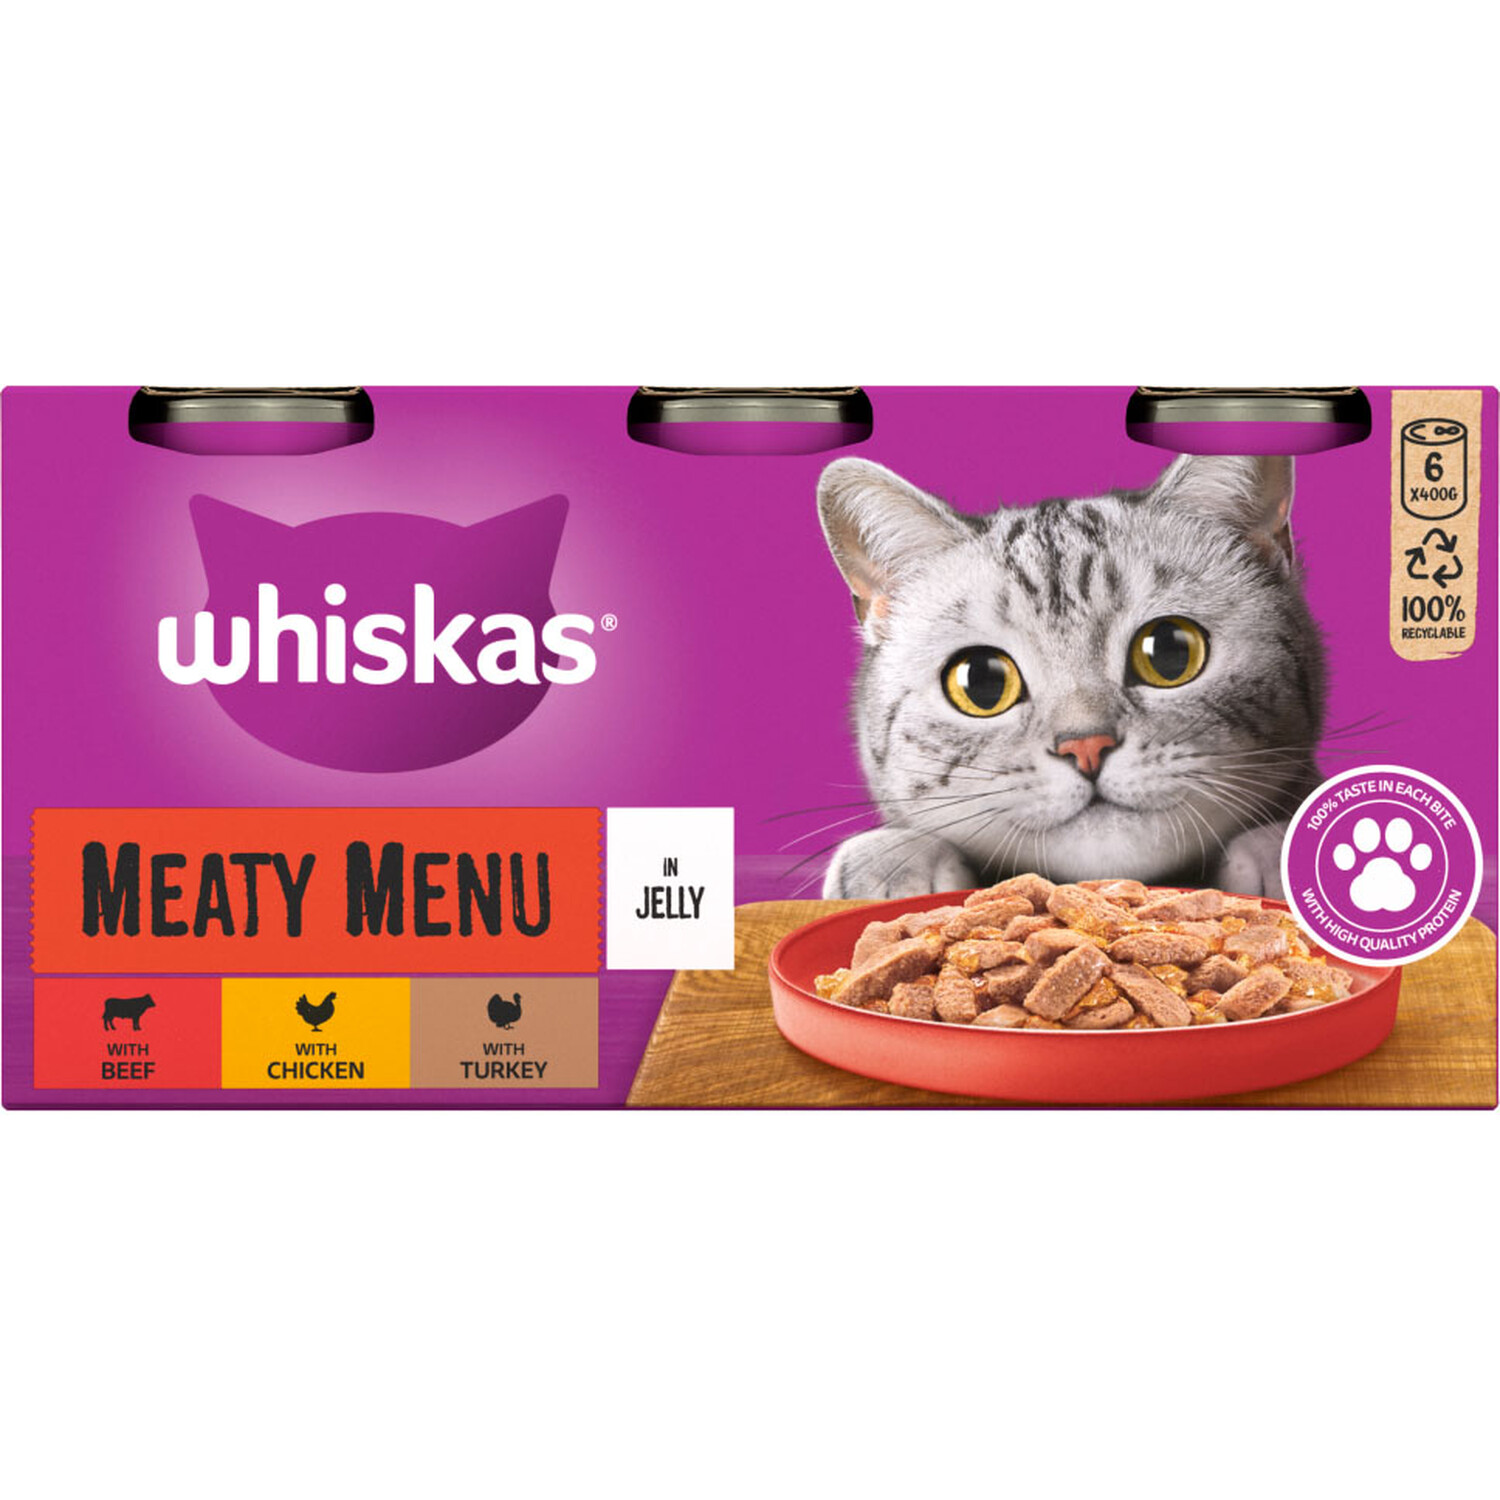 Whiskas 1 Plus Years Meaty Menu in Jelly Cat Food Tins 6 Pack Image 5